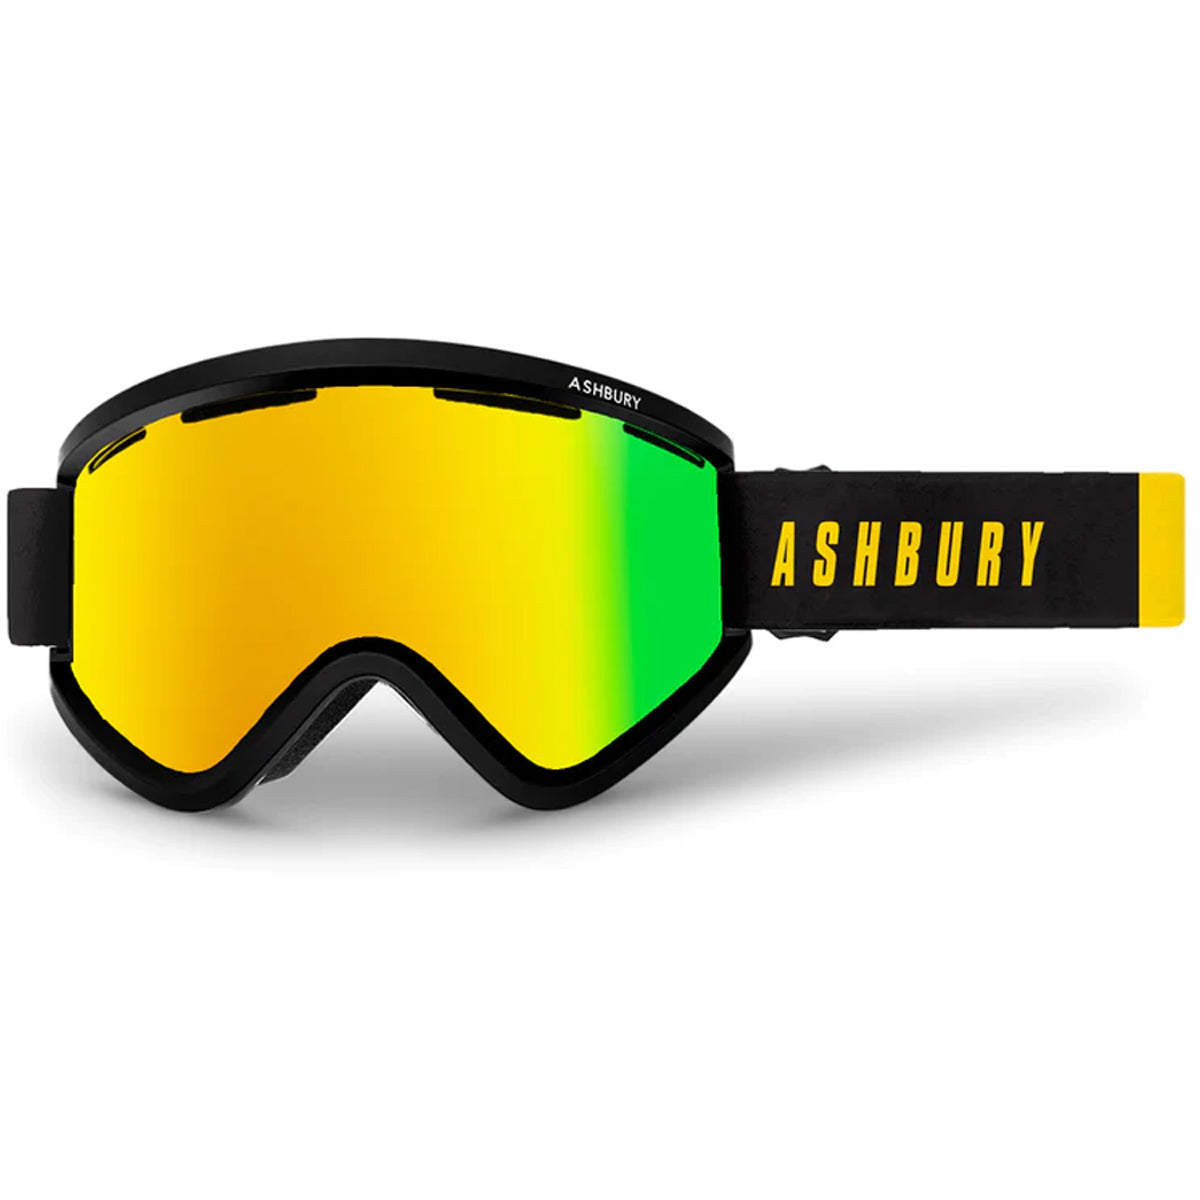 Ashbury Blackbird Snowboard Goggles - Bank/Gold Mirror/Yellow Spare image 1